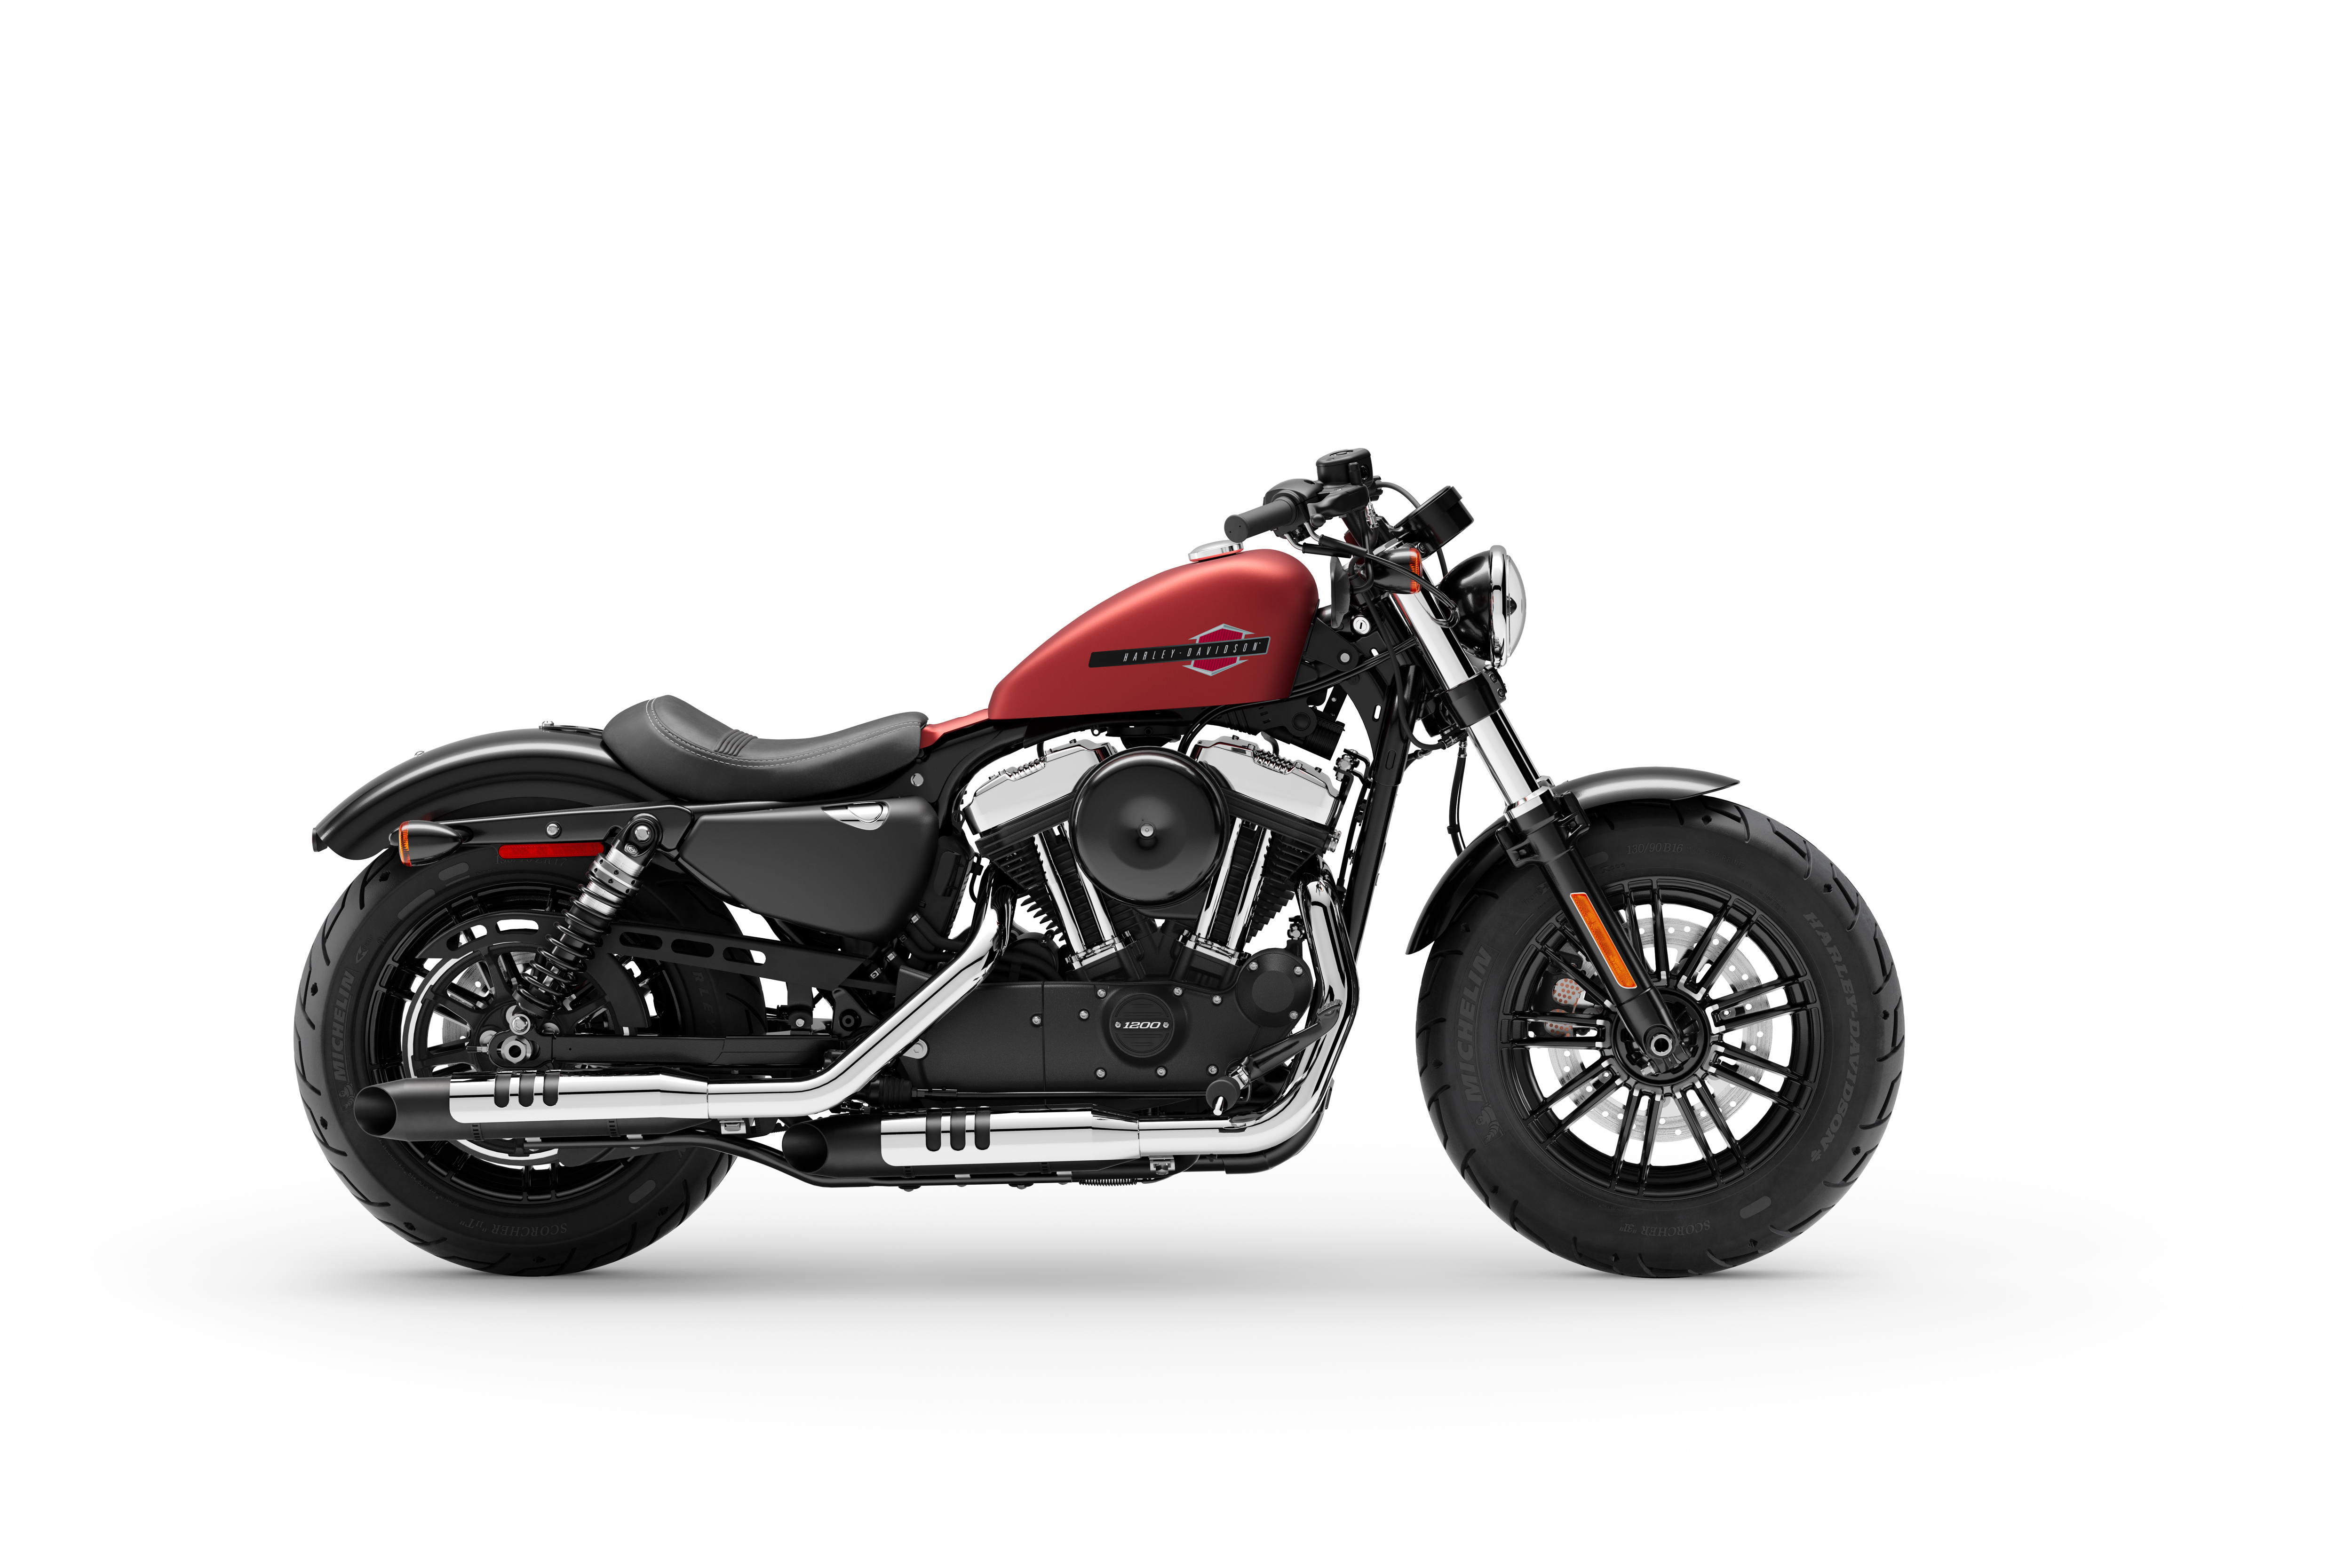 2022 Harley Davidson Sportster 48 (XL1200X) FULL Review! 